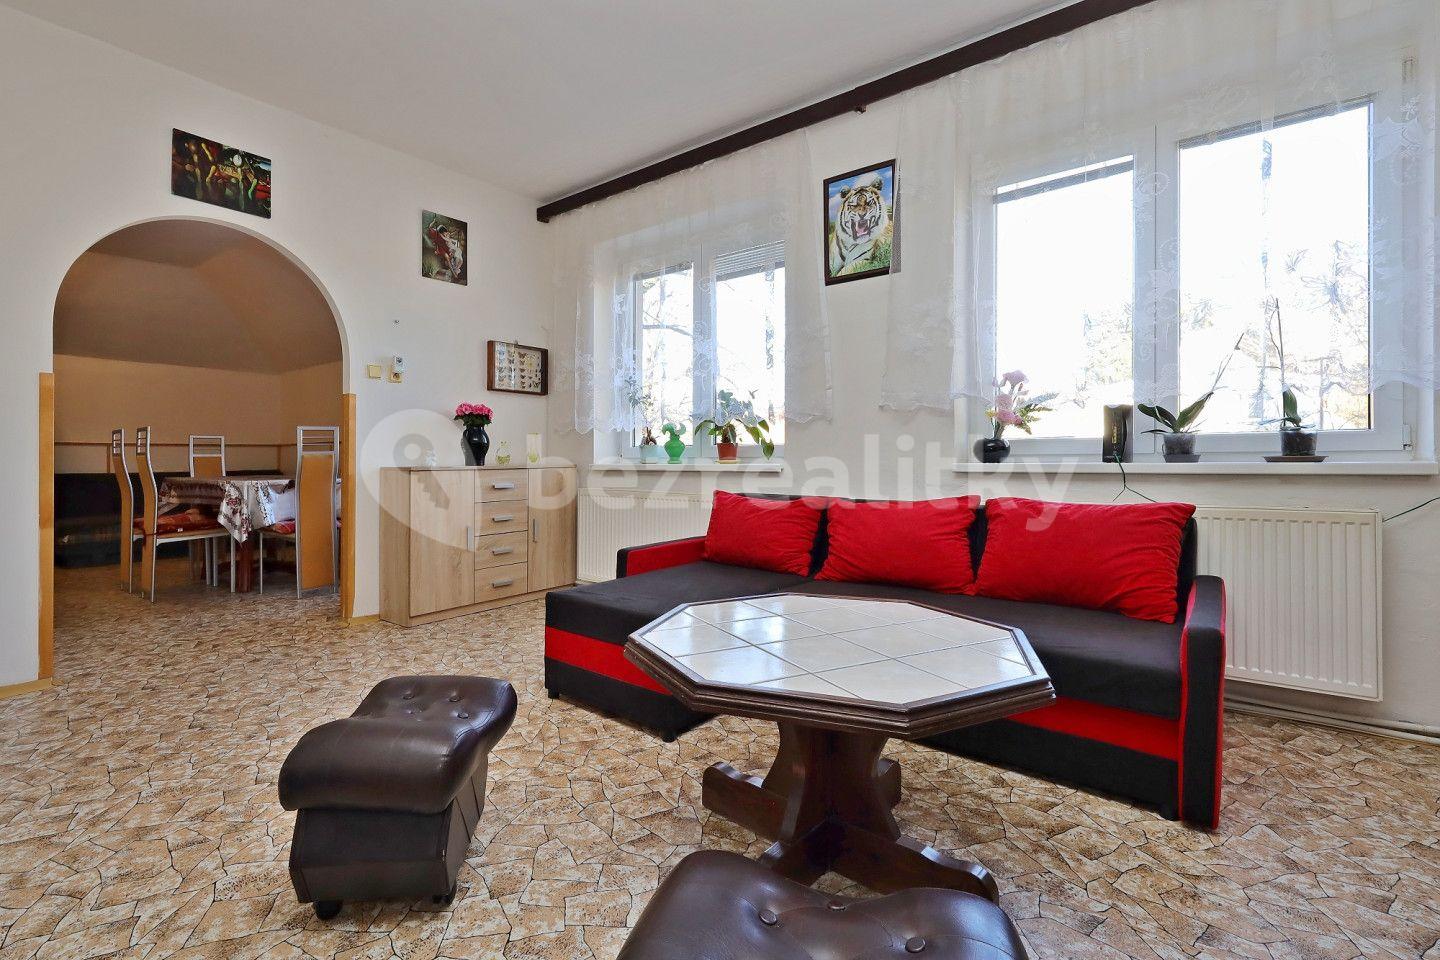 3 bedroom flat for sale, 100 m², Valečov, Okrouhlice, Vysočina Region